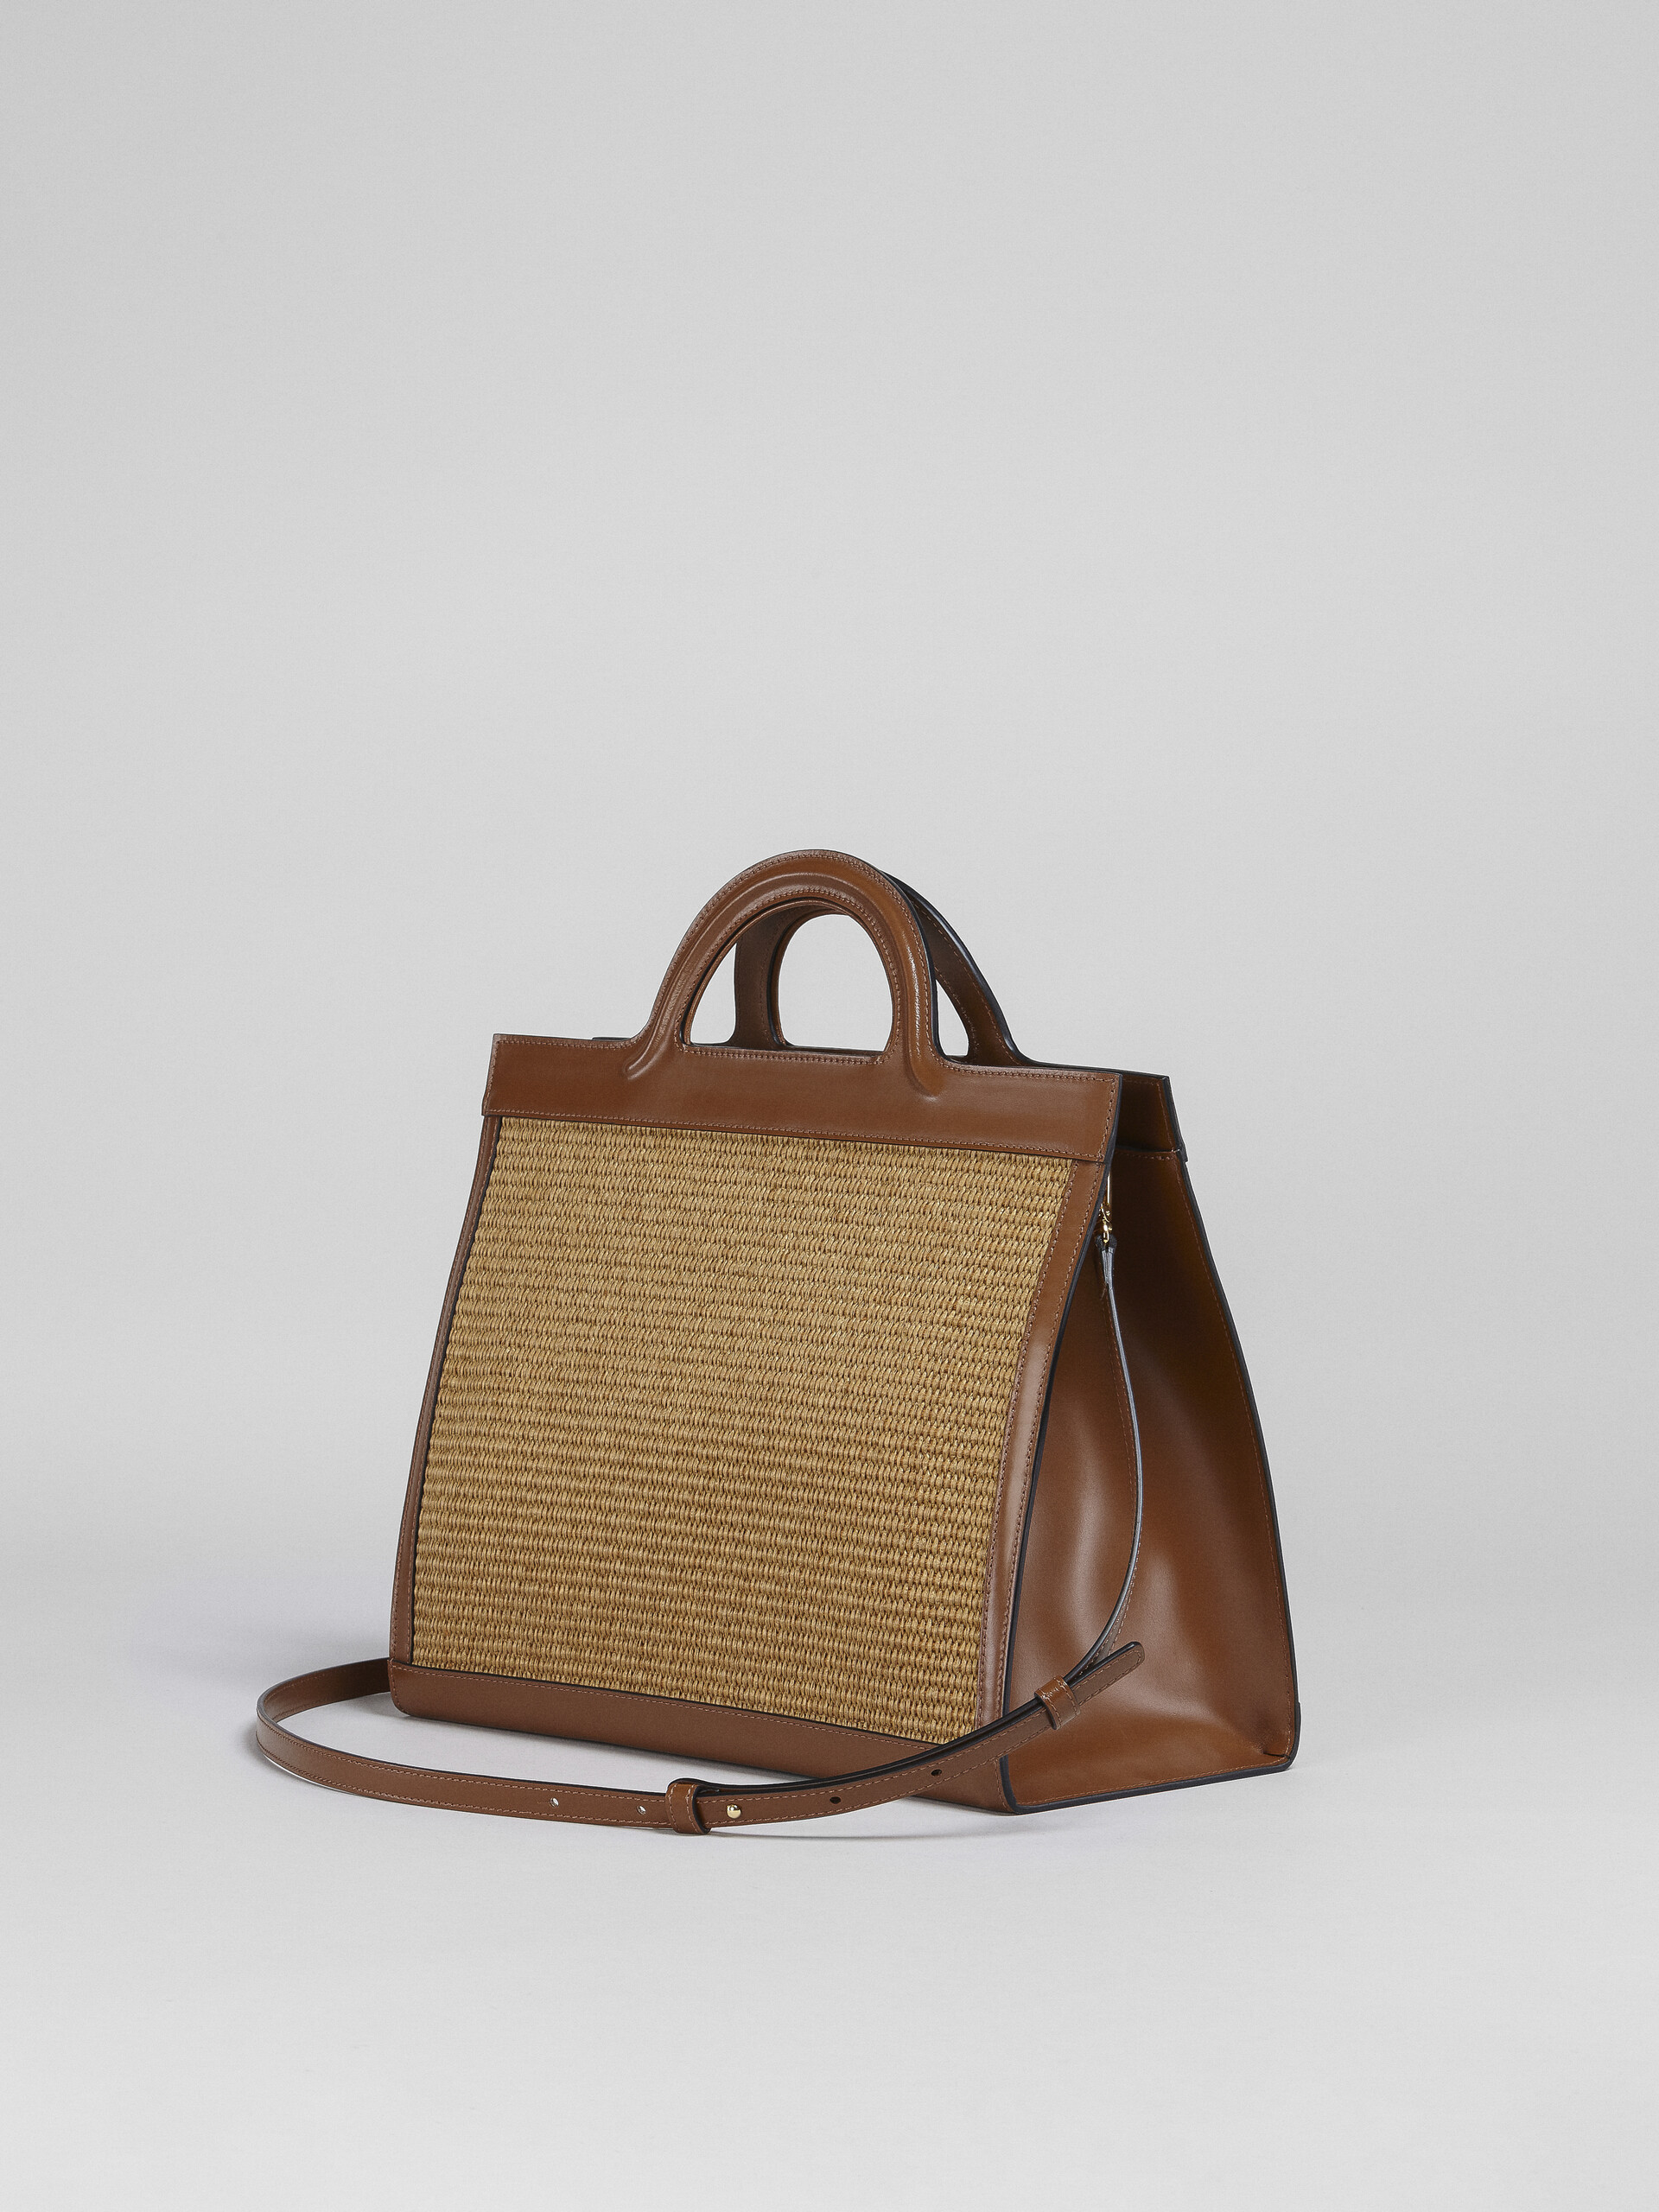 TROPICALIA tote bag in brown leather and raffia - Handbags - Image 3